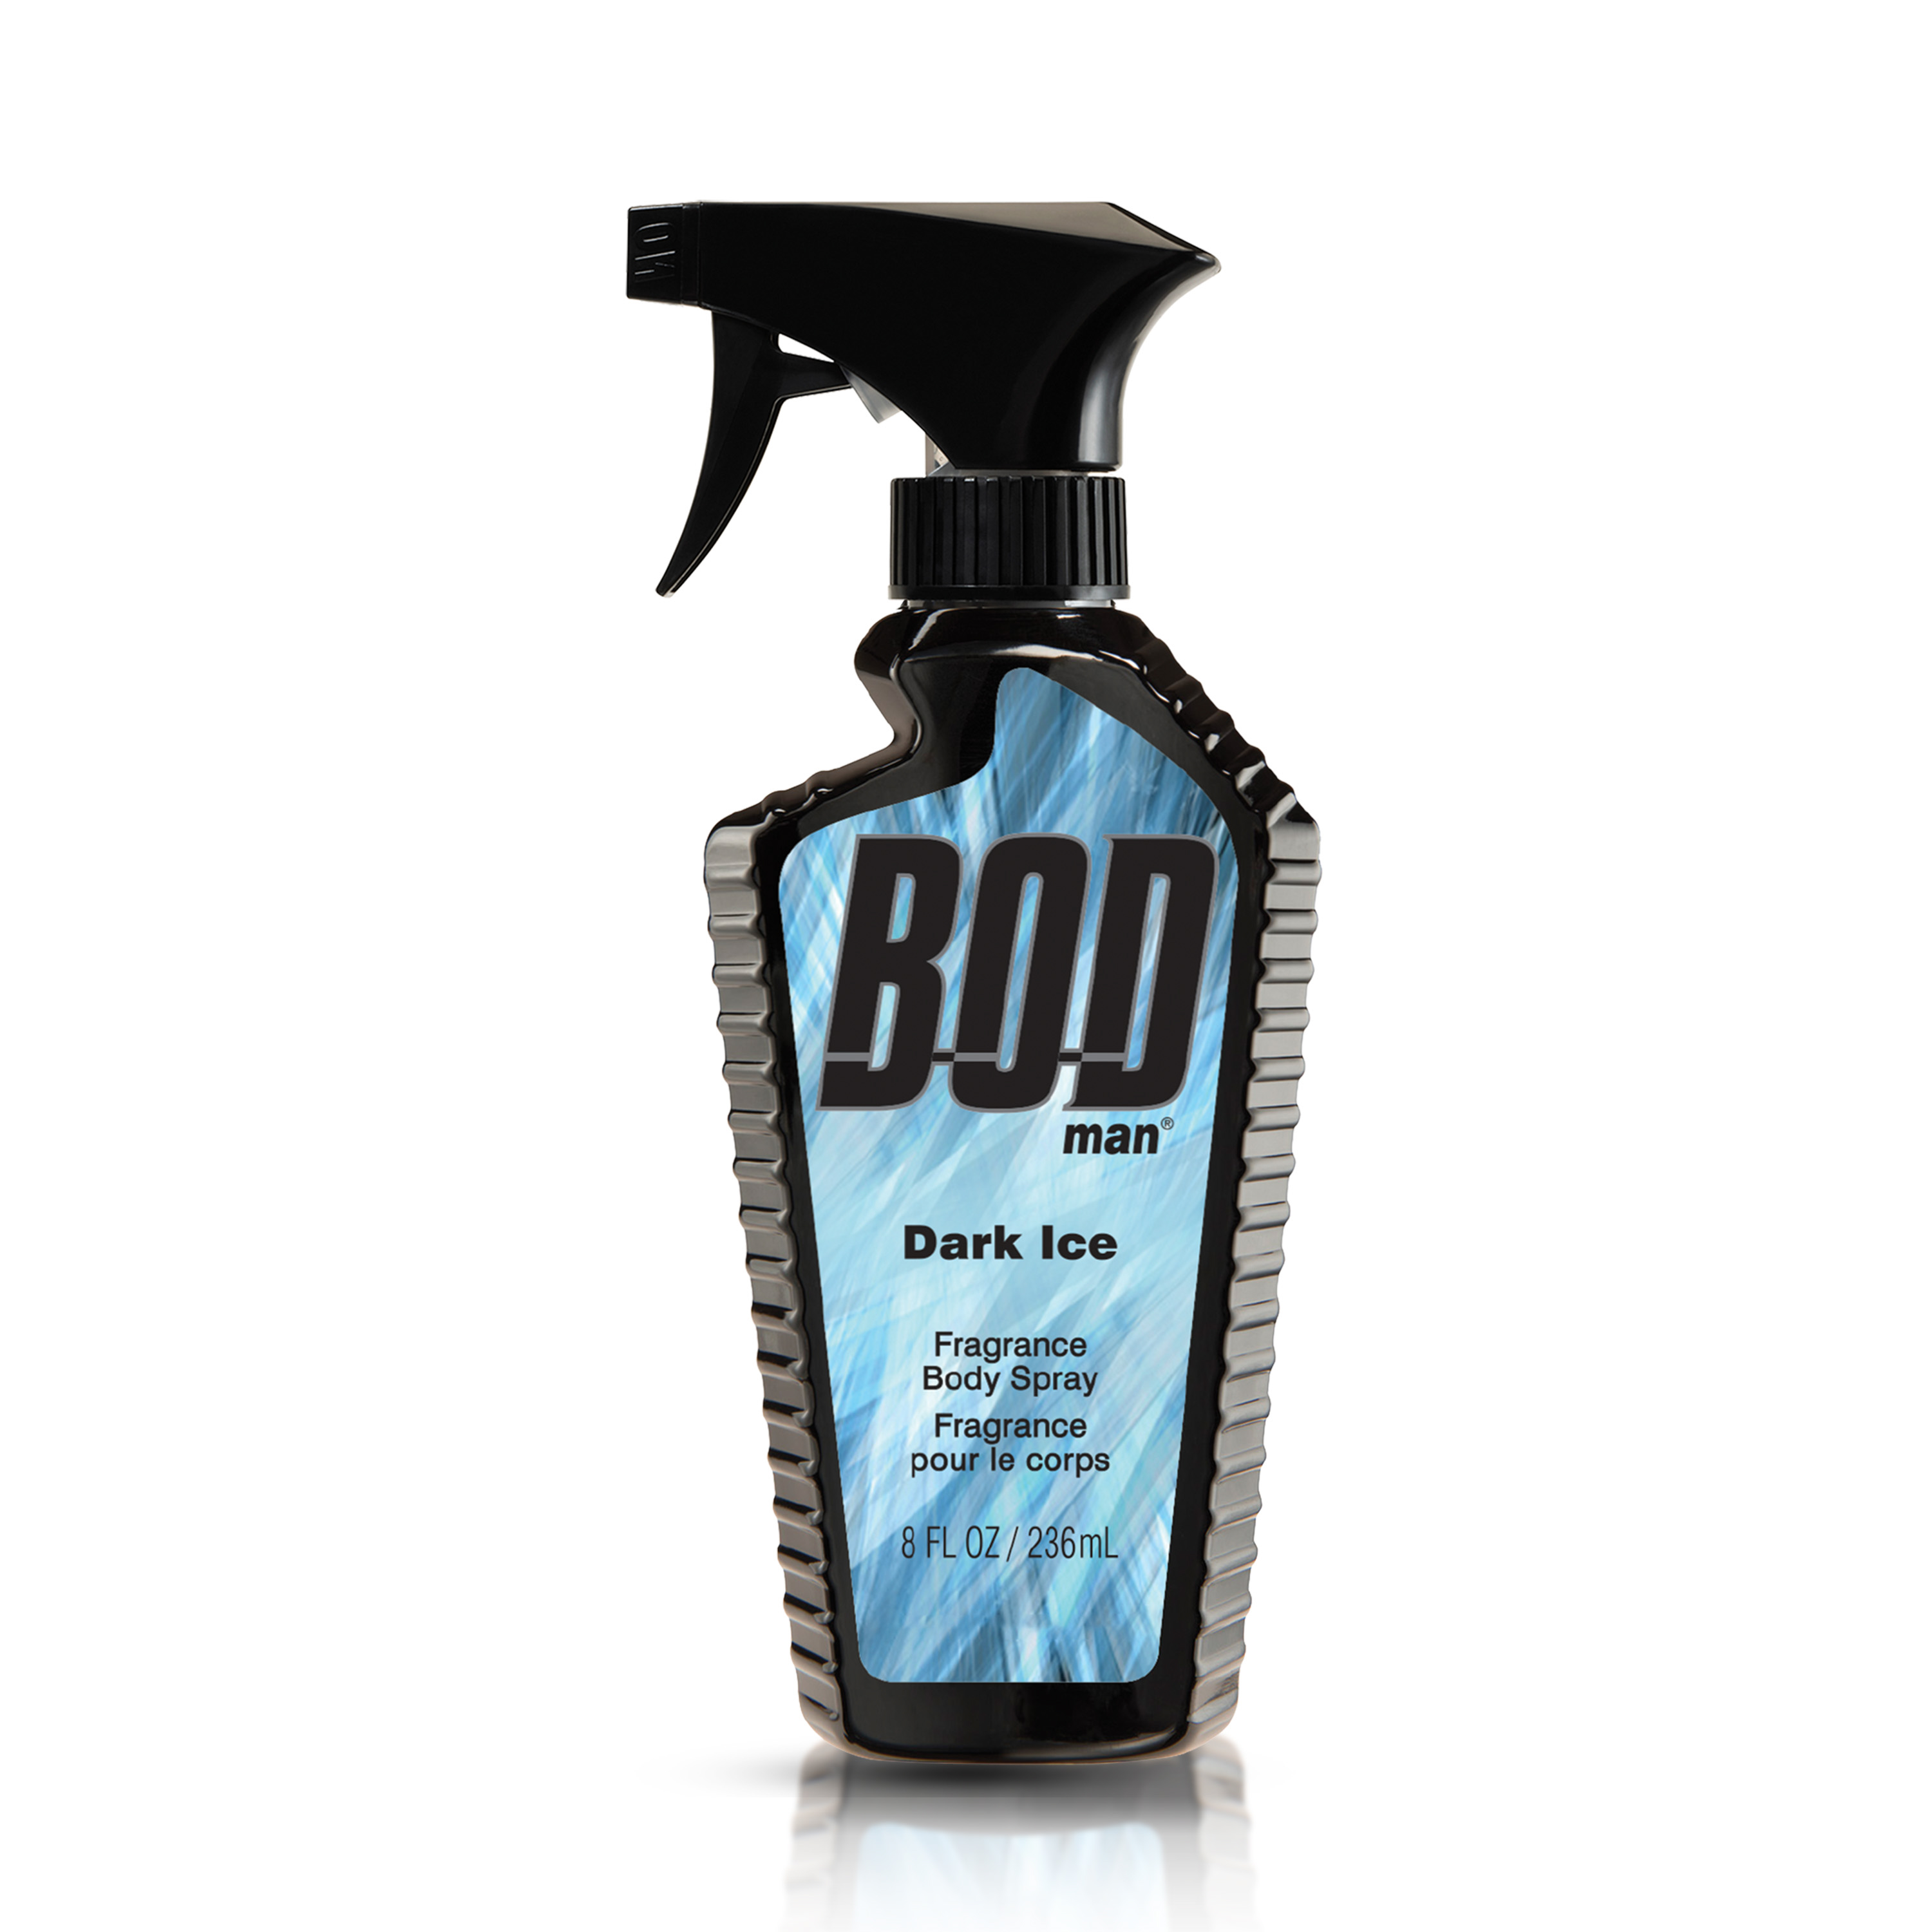 BOD Man Dark Ice Fragrance Body Spray, 8 fl oz - image 1 of 7